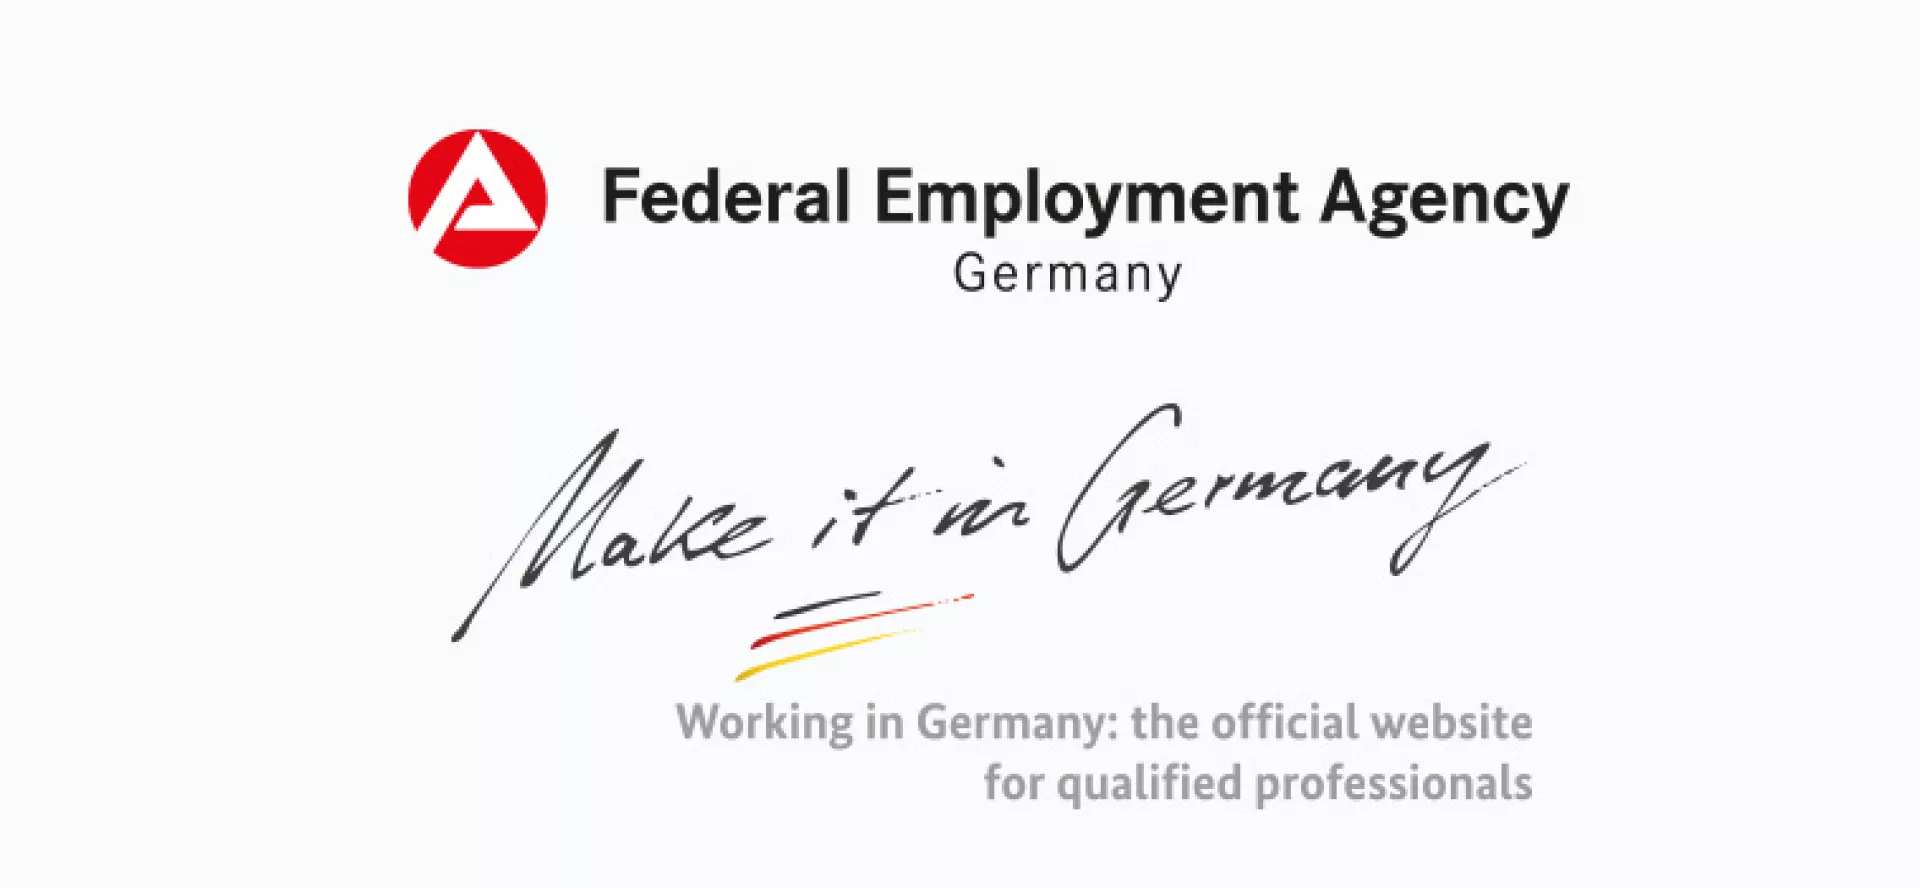 Logo Federal Employment Agency Germany und Make it in Germany